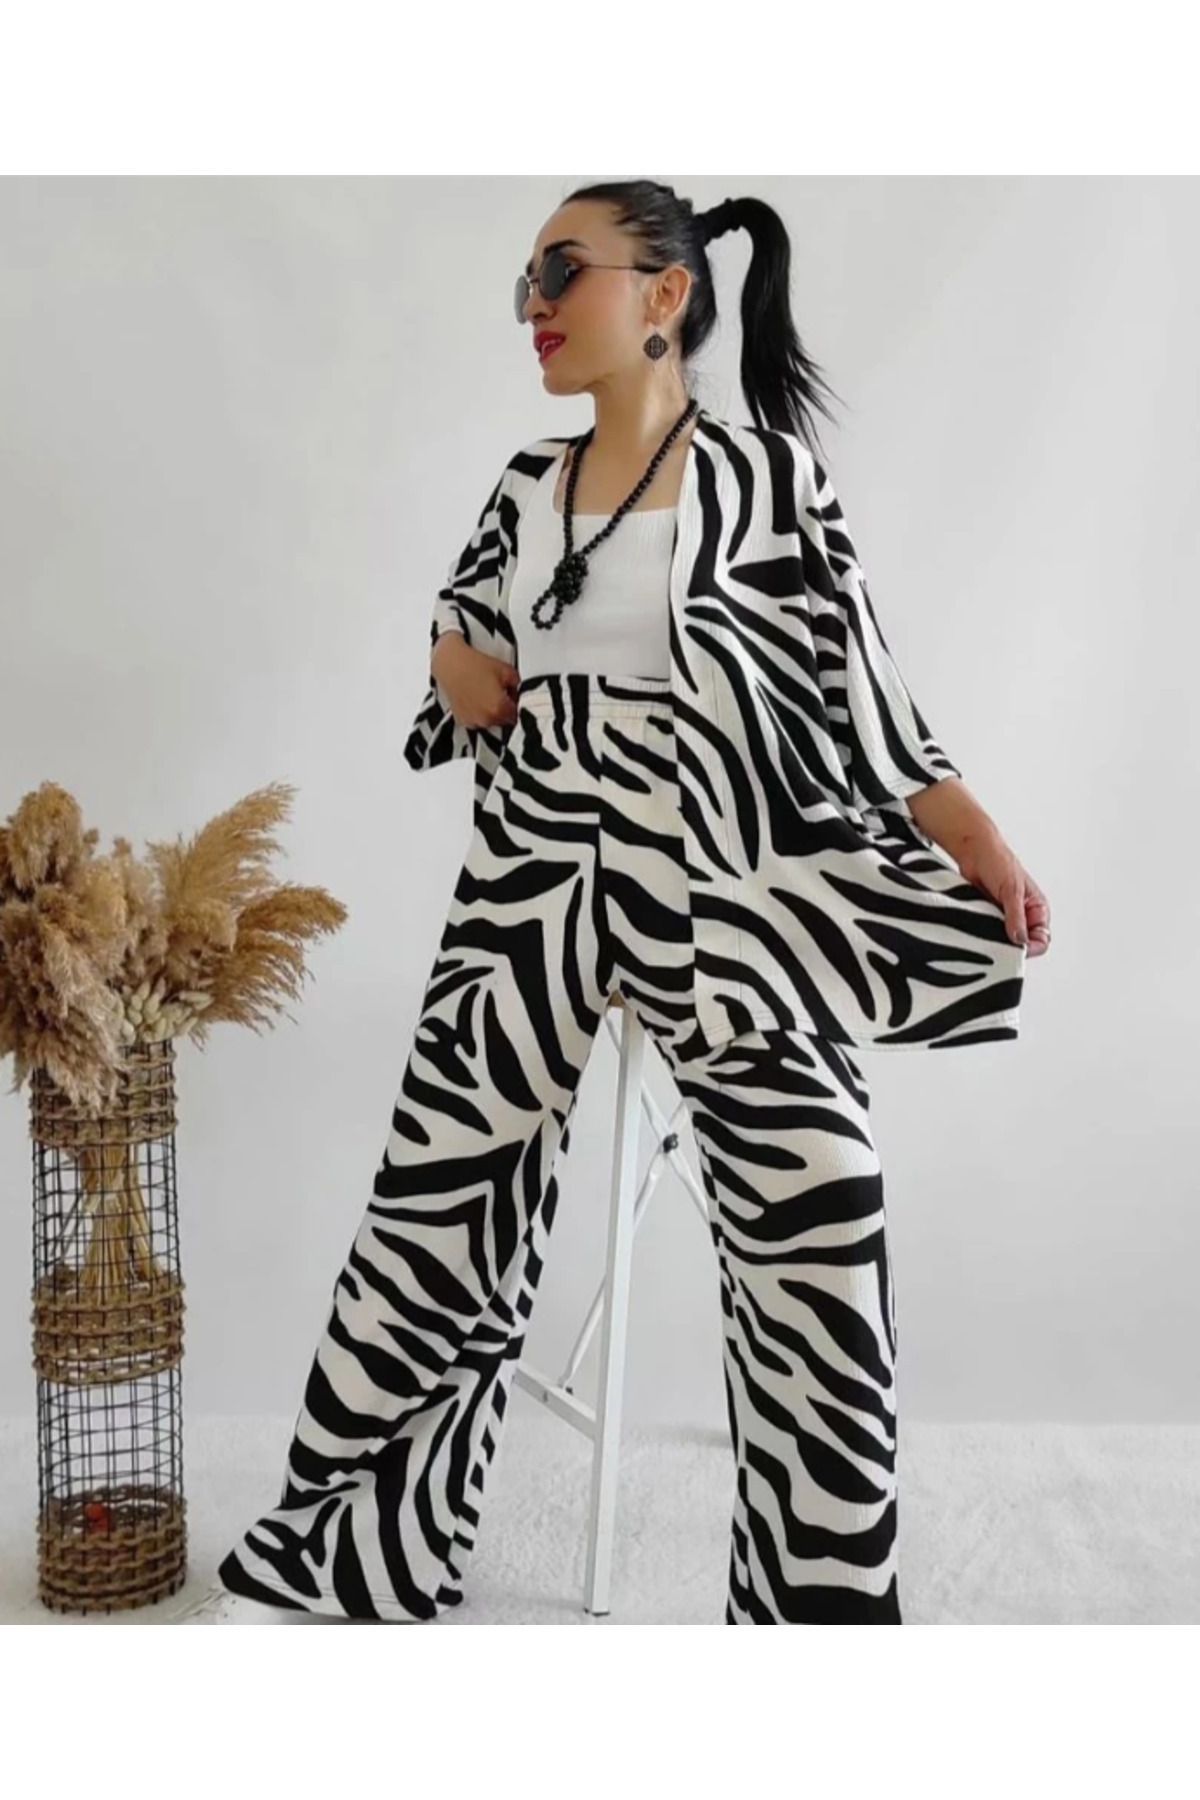 MİRA BUTİK Kimono Takımı Zebra